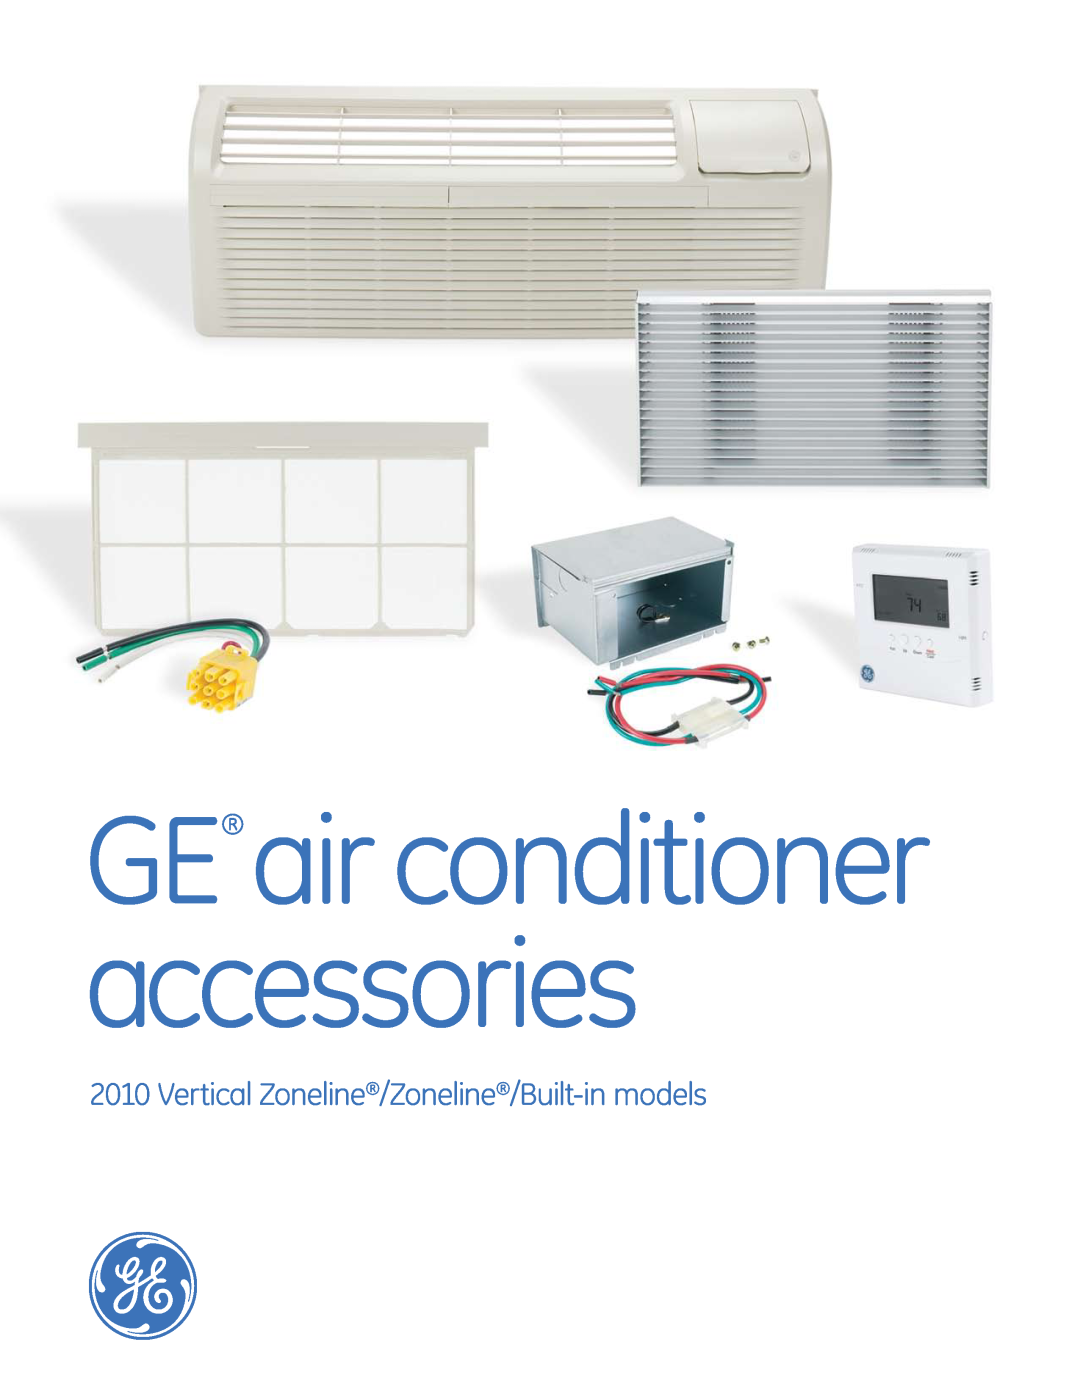 GE 2010 manual Vertical Zoneline/Zoneline/Built-inmodels, GE air conditioner accessories 